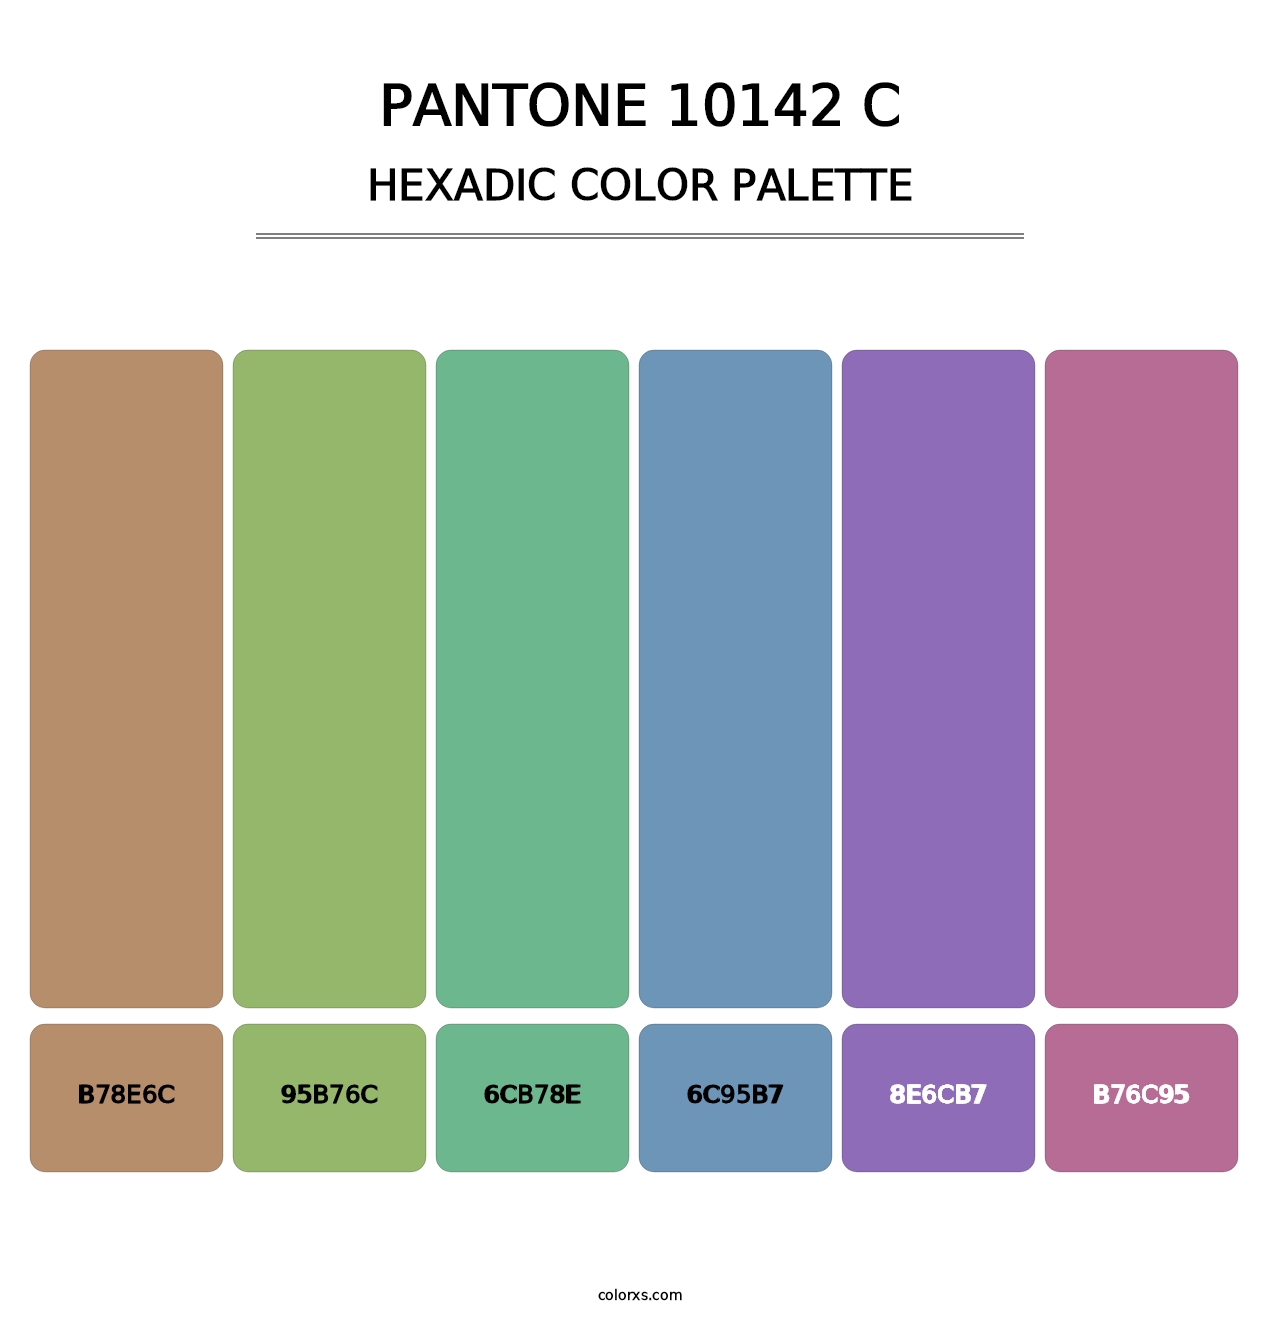 PANTONE 10142 C - Hexadic Color Palette